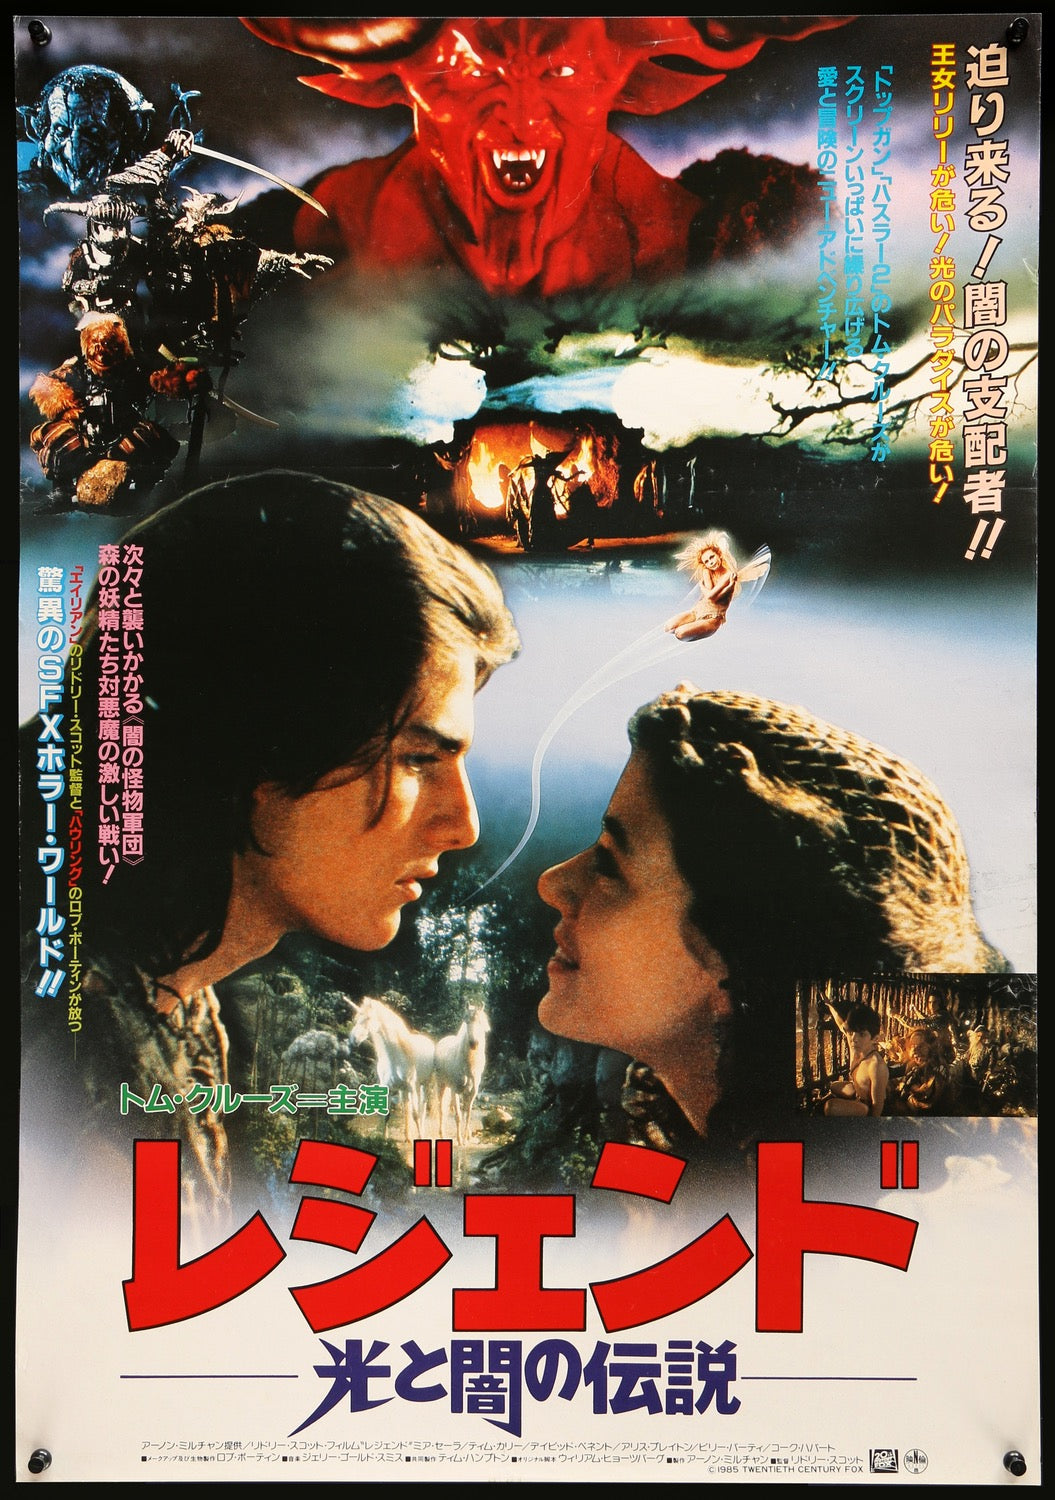 Legend (1985) original movie poster for sale at Original Film Art